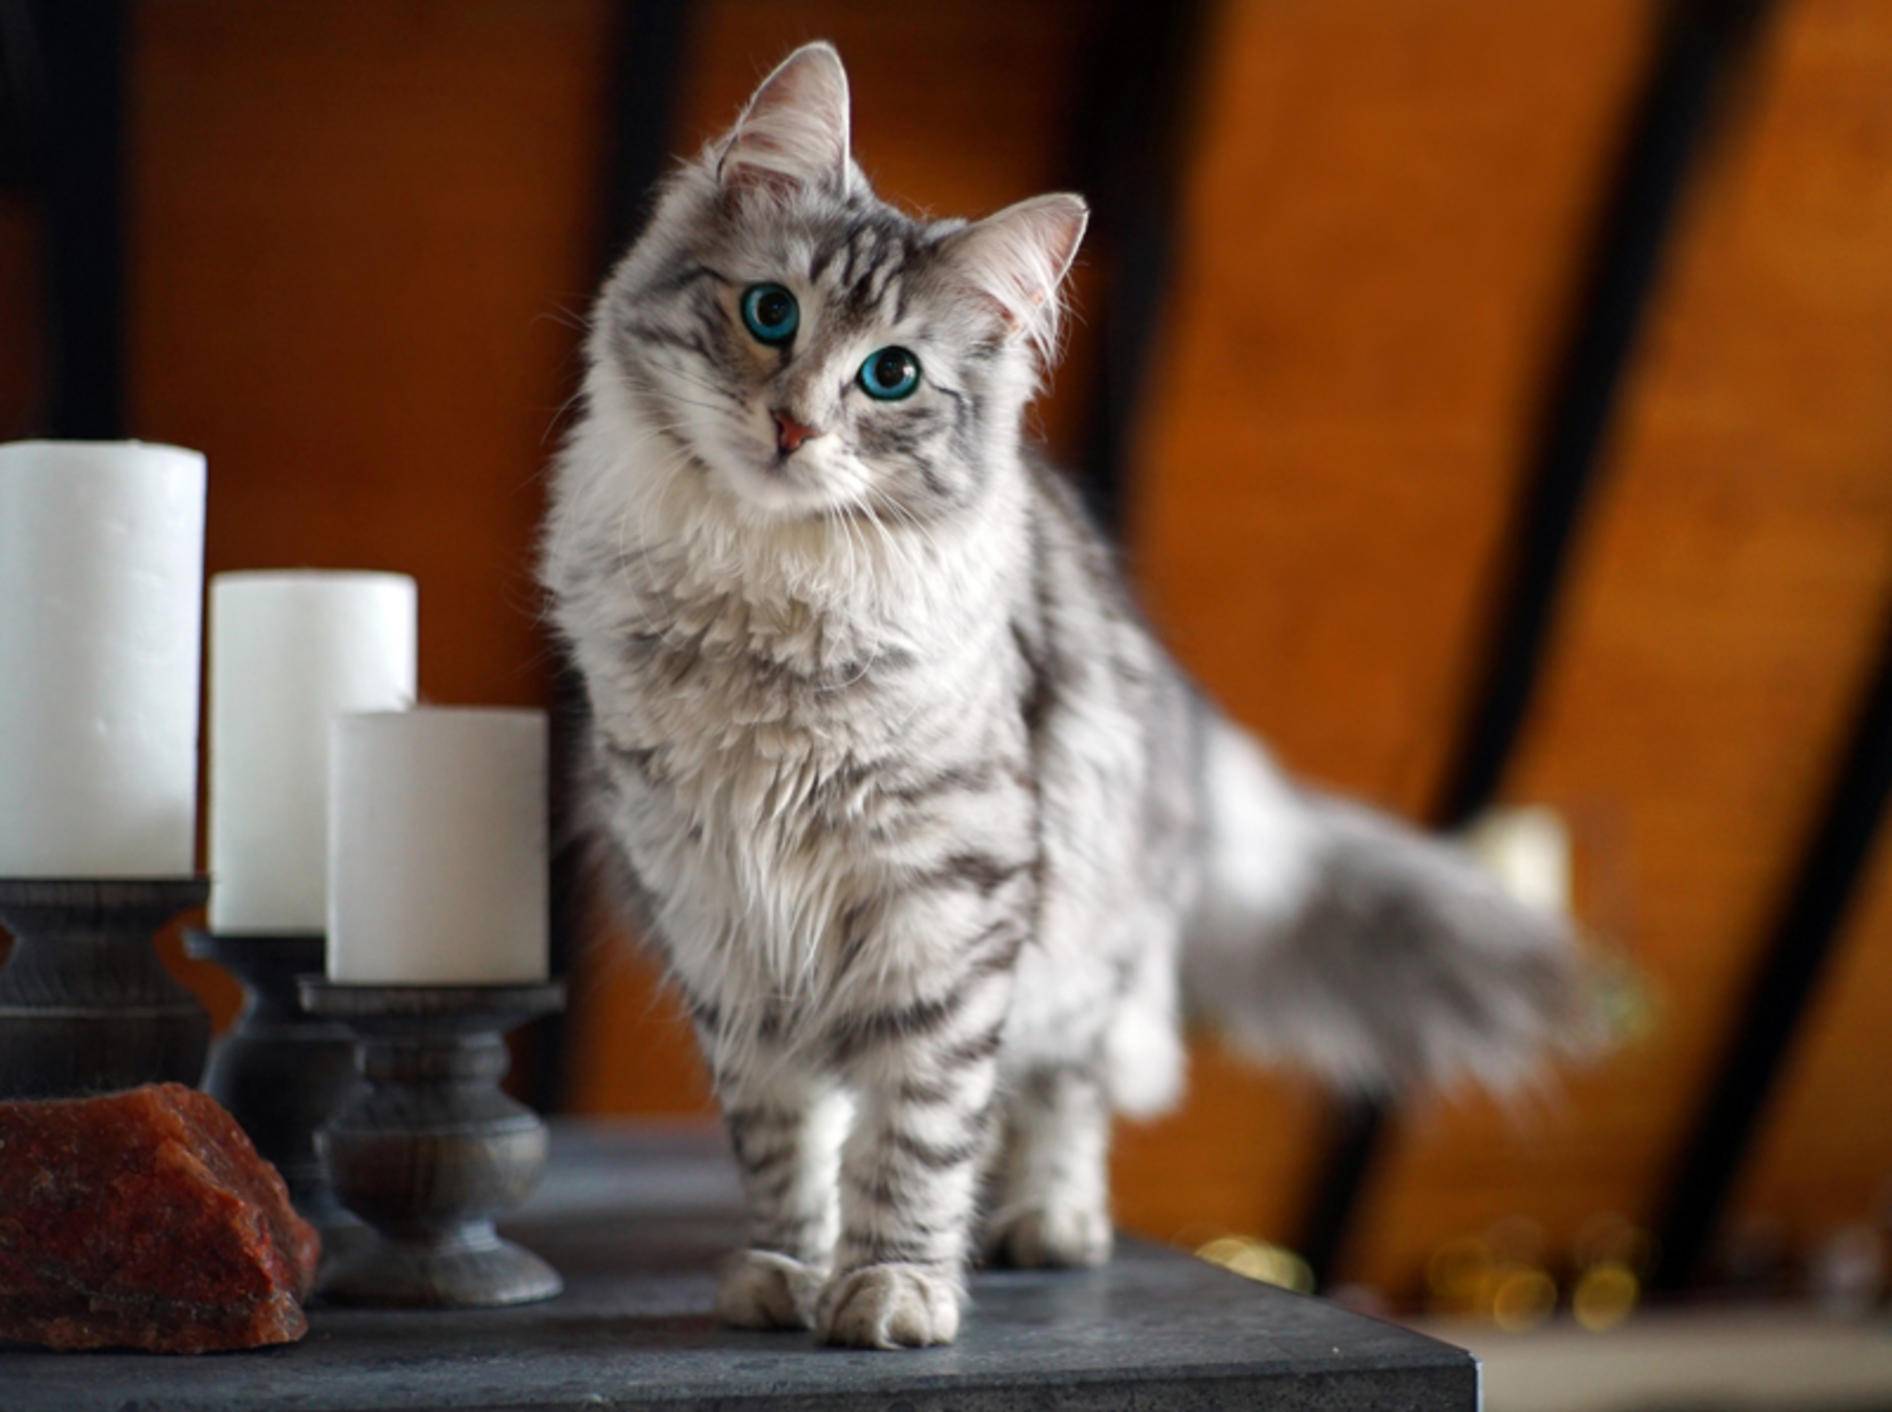 "Nanu? Was ist denn das?", wundert sich diese neugierige Katze. Ob sie wohl die Kamera meint? – Shutterstock / www.julian.pictures